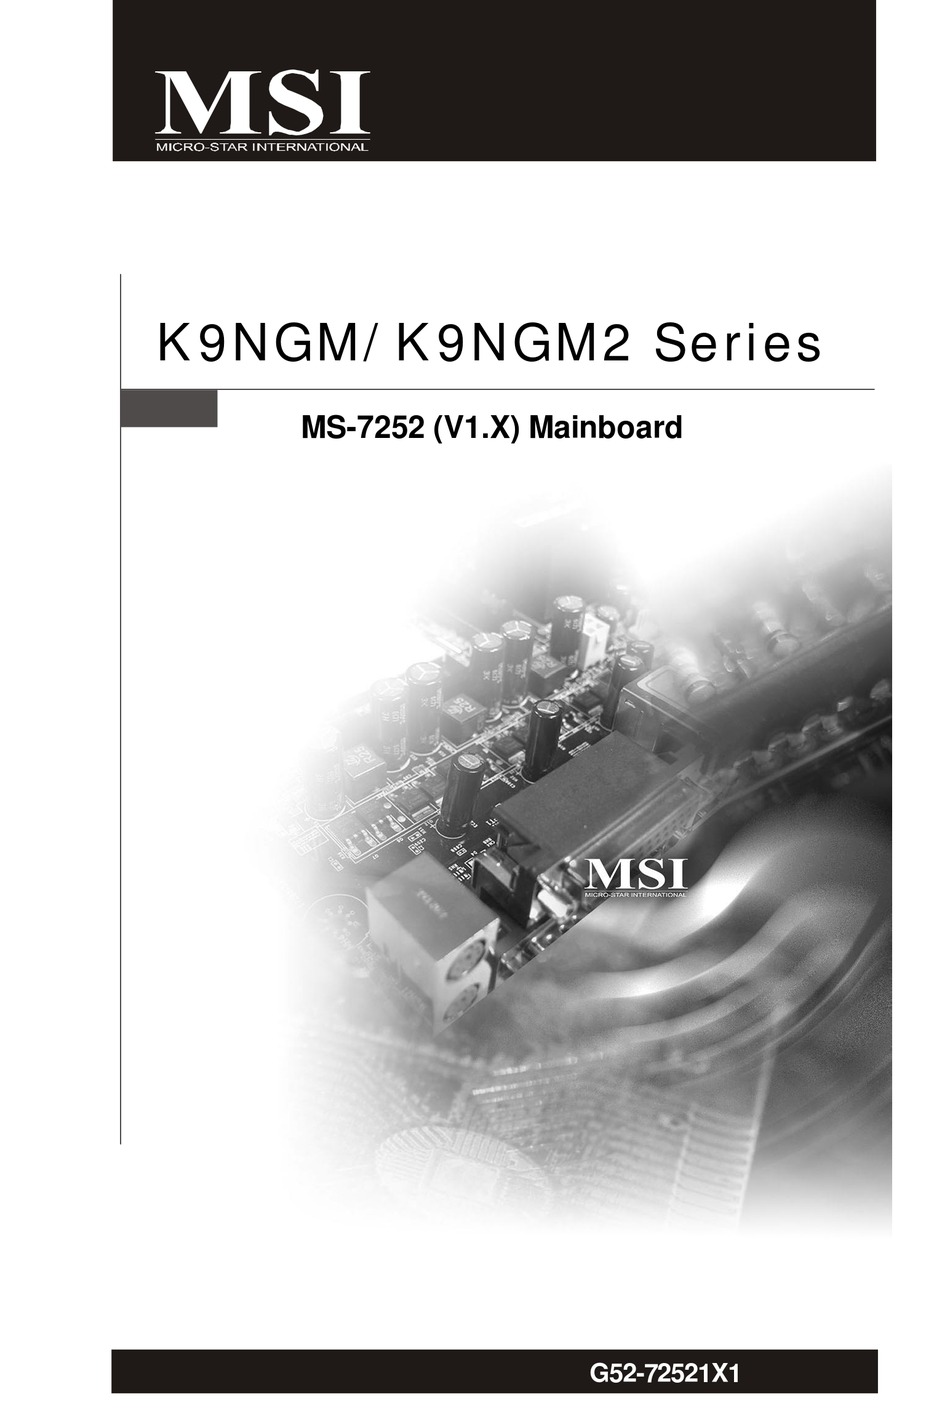 free 6147 manual motherboard msi programs